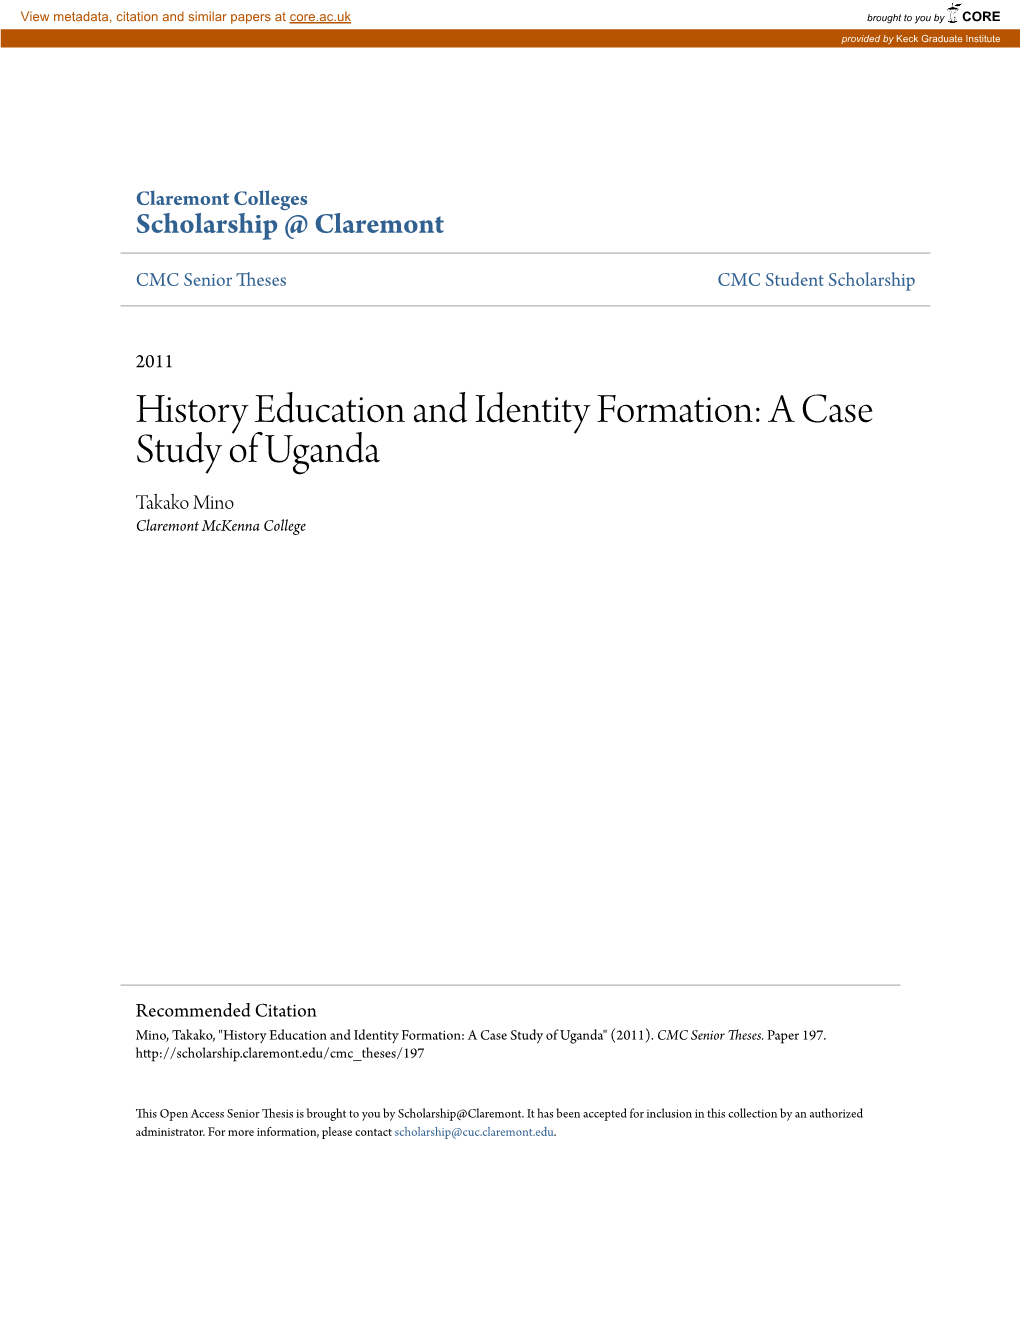 History Education and Identity Formation: a Case Study of Uganda Takako Mino Claremont Mckenna College